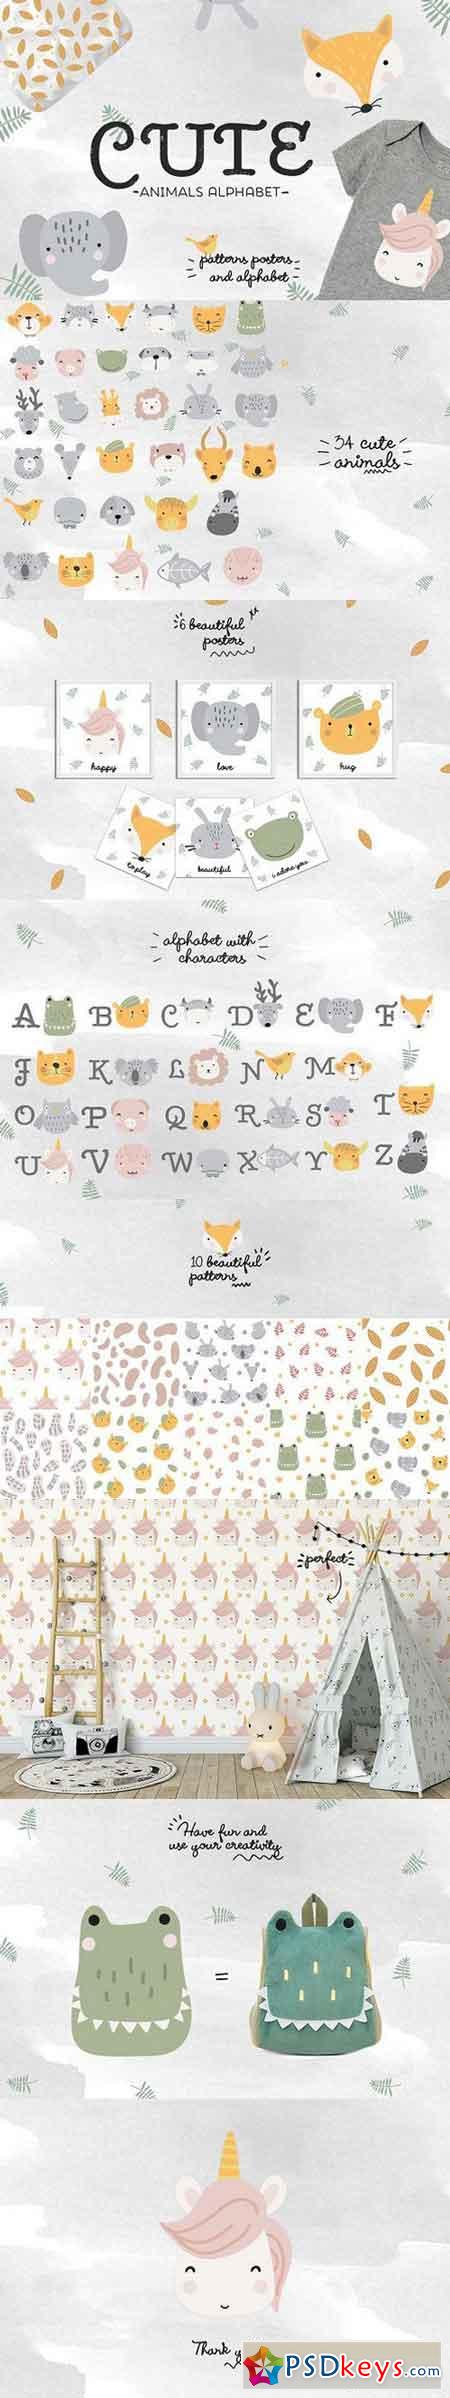 Cute animals alphabet 1618287